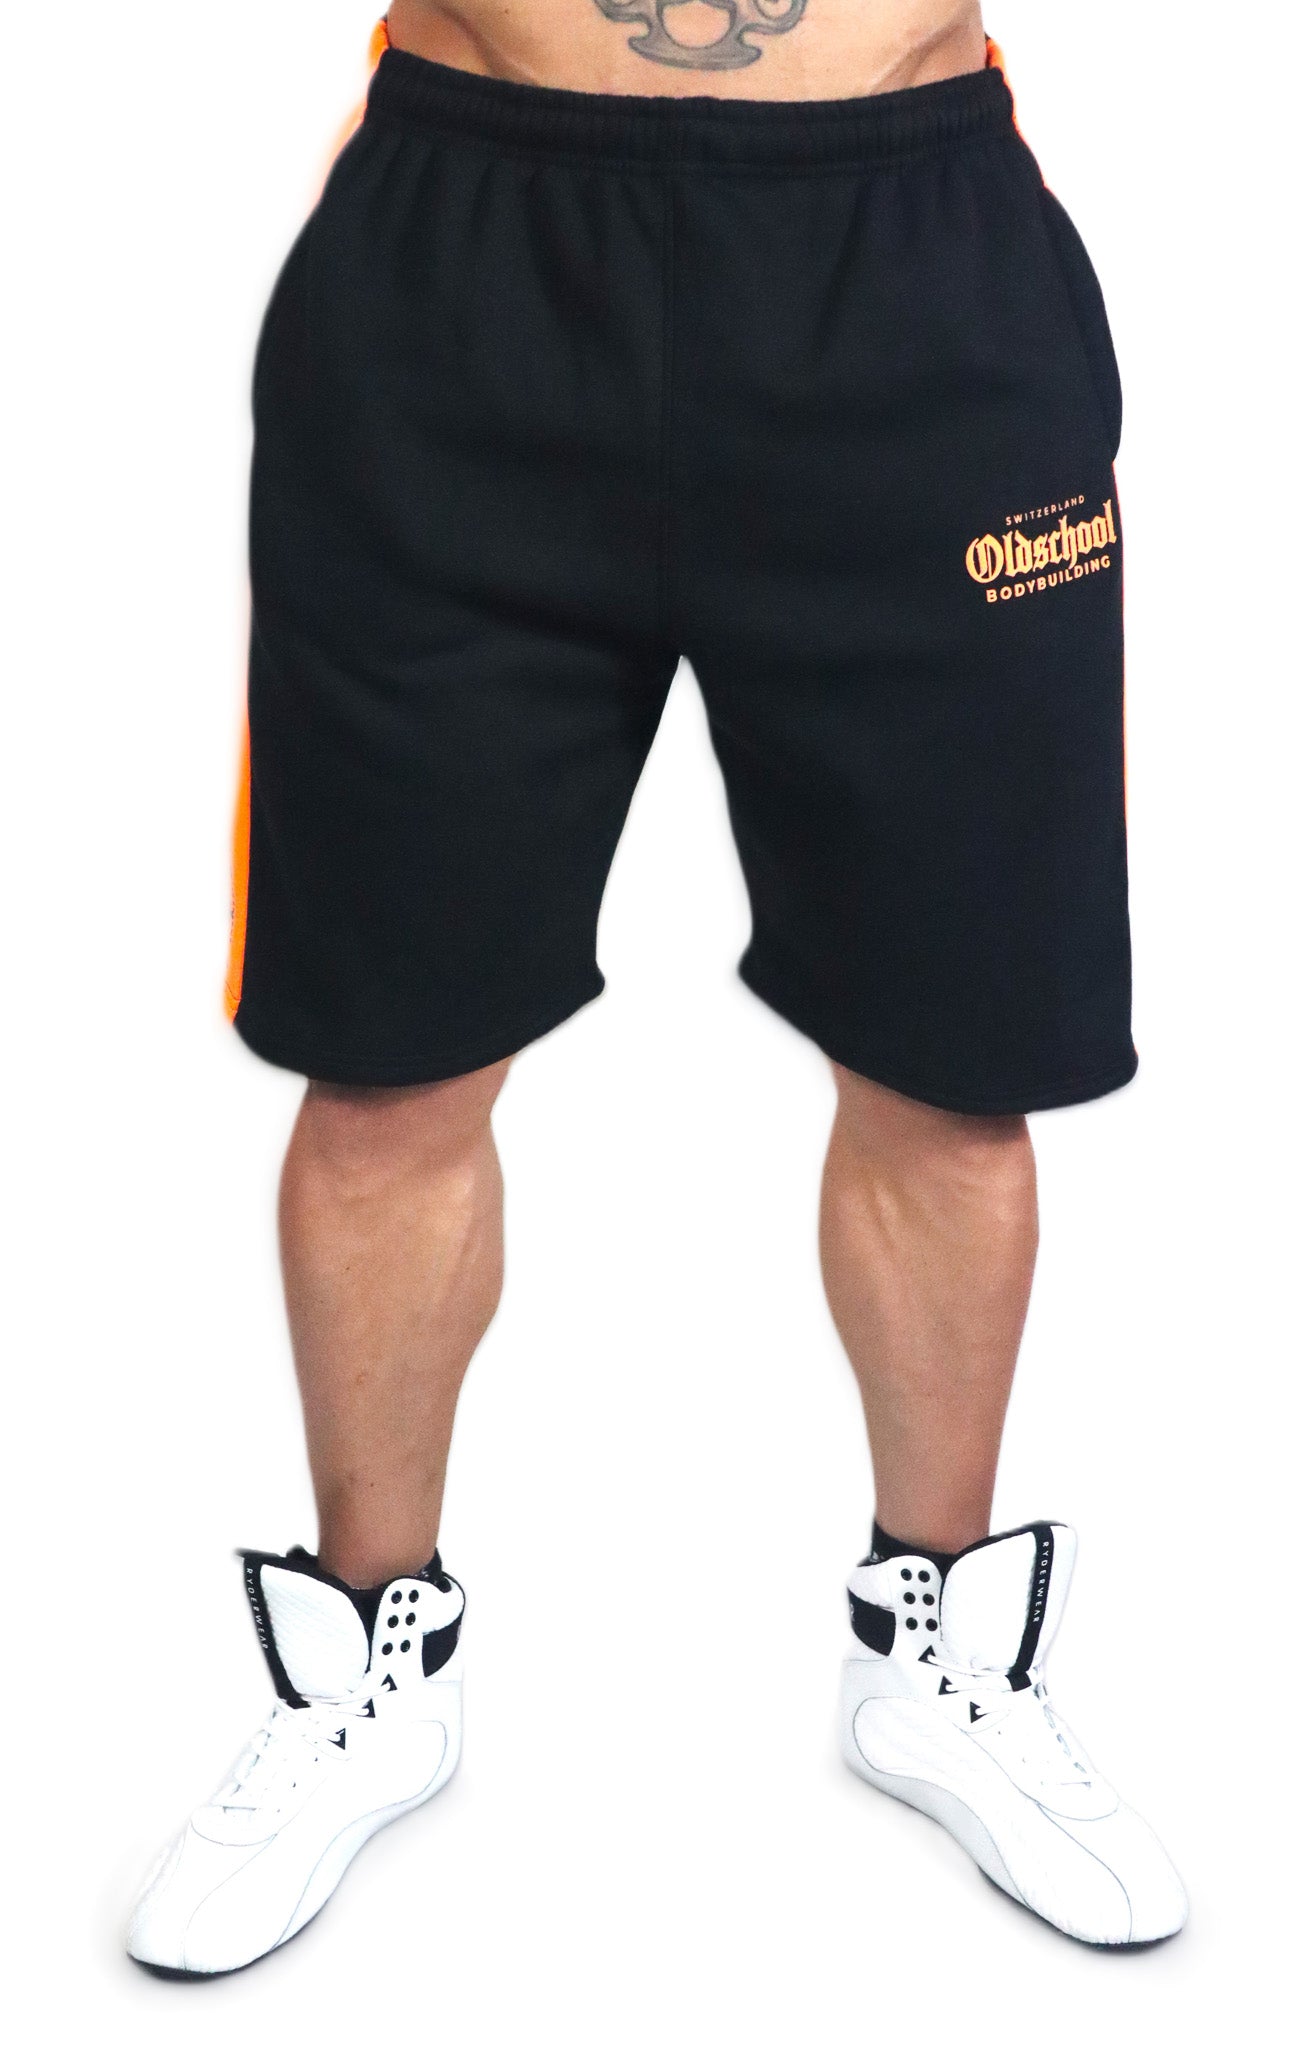 Oldschool Bodybuilding Switzerland Two Tone Shorts - Schwarz/Neon Orange